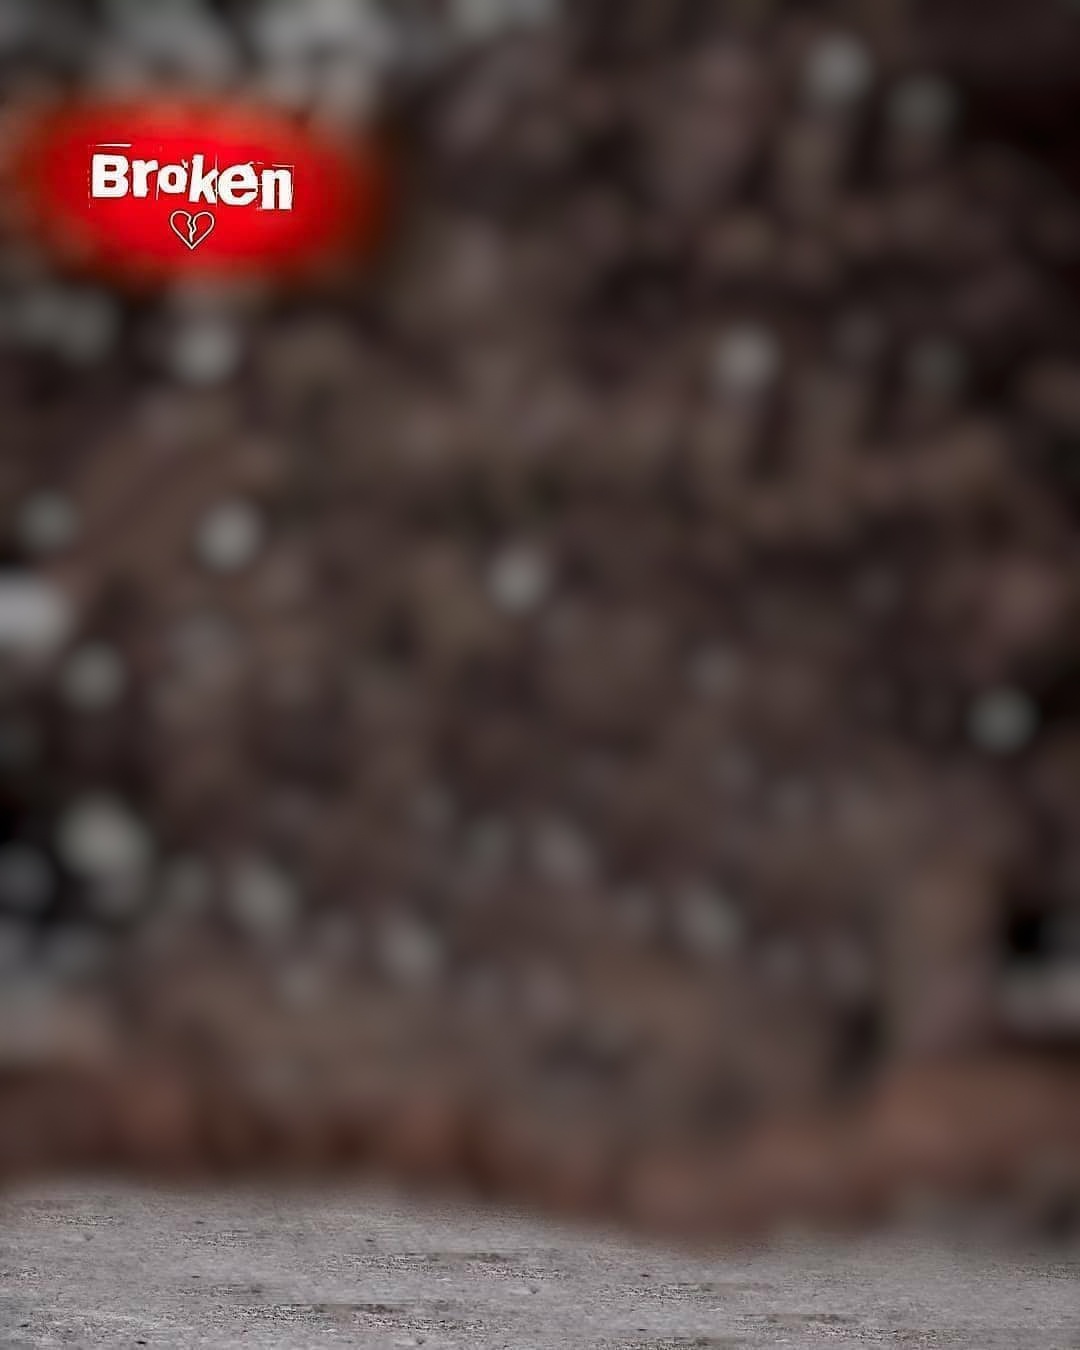 Broken Heart CB Background Image